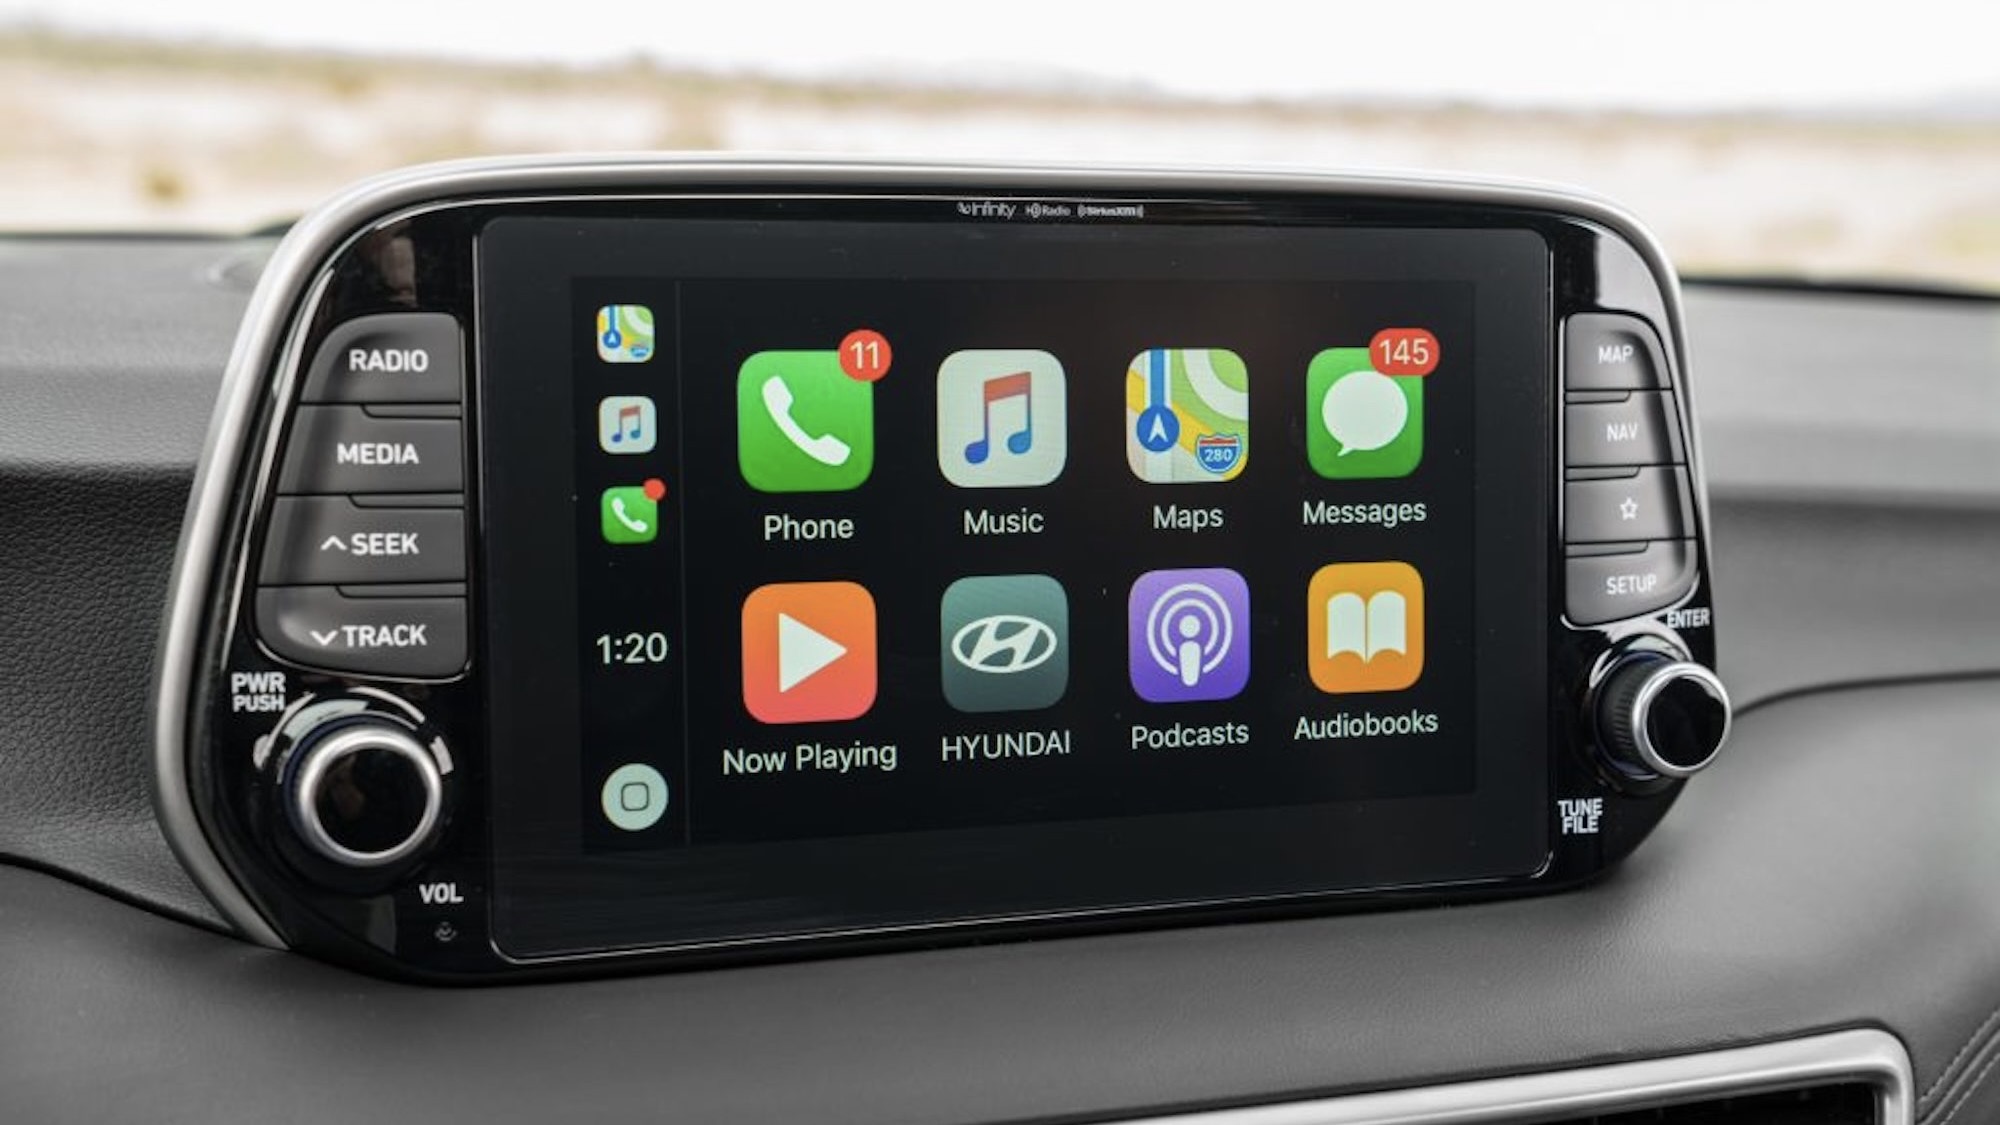 Report: Hyundai finally adding wireless CarPlay support to more cars  starting this year - 9to5Mac